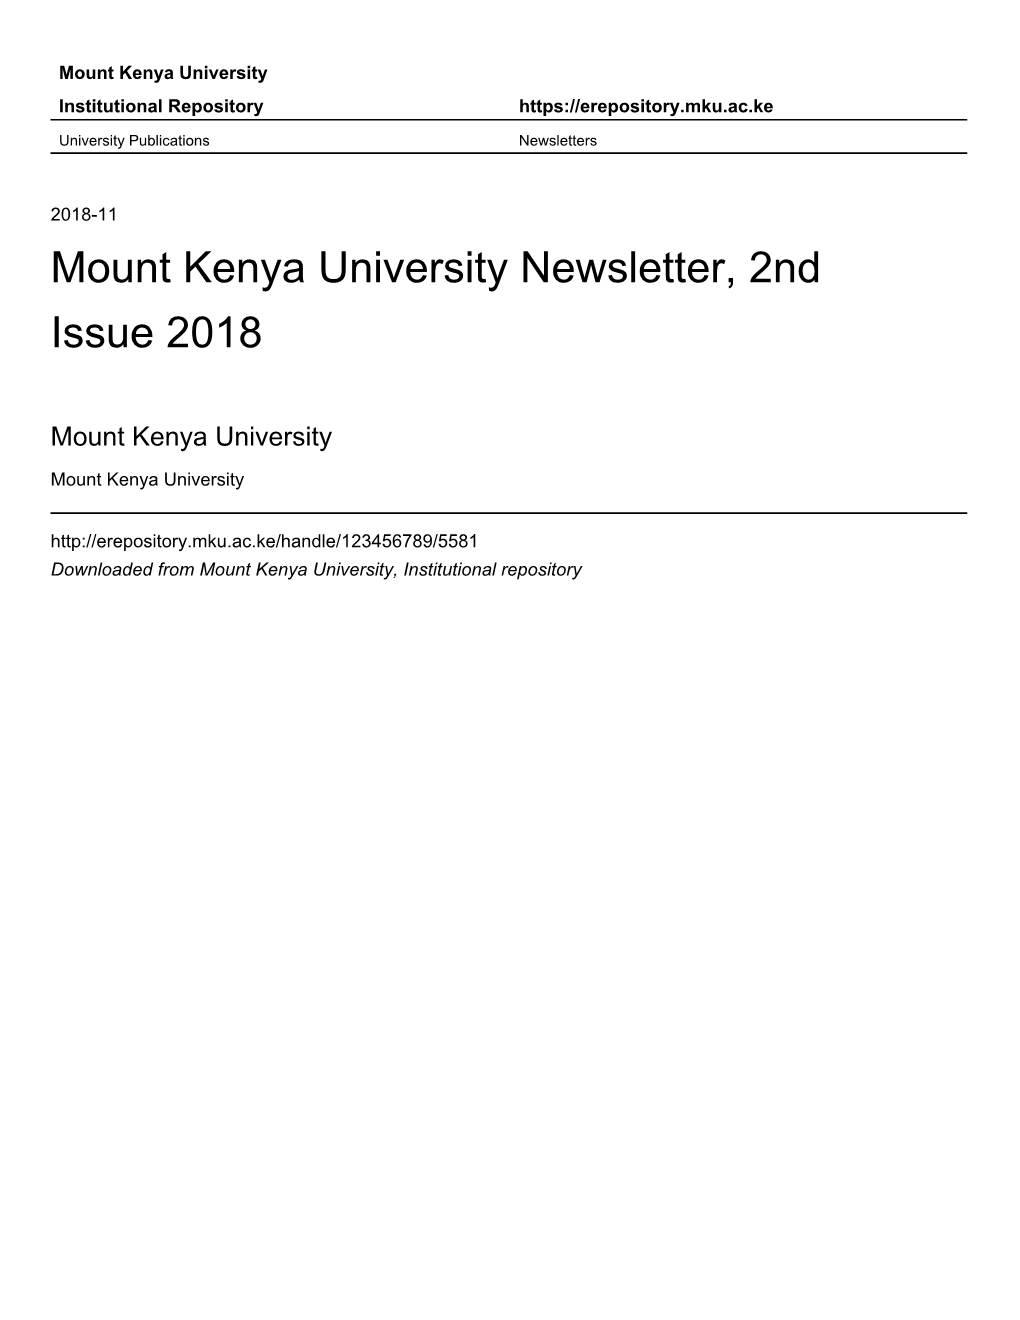 Mount Kenya University Newsletter, 2Nd Issue 2018